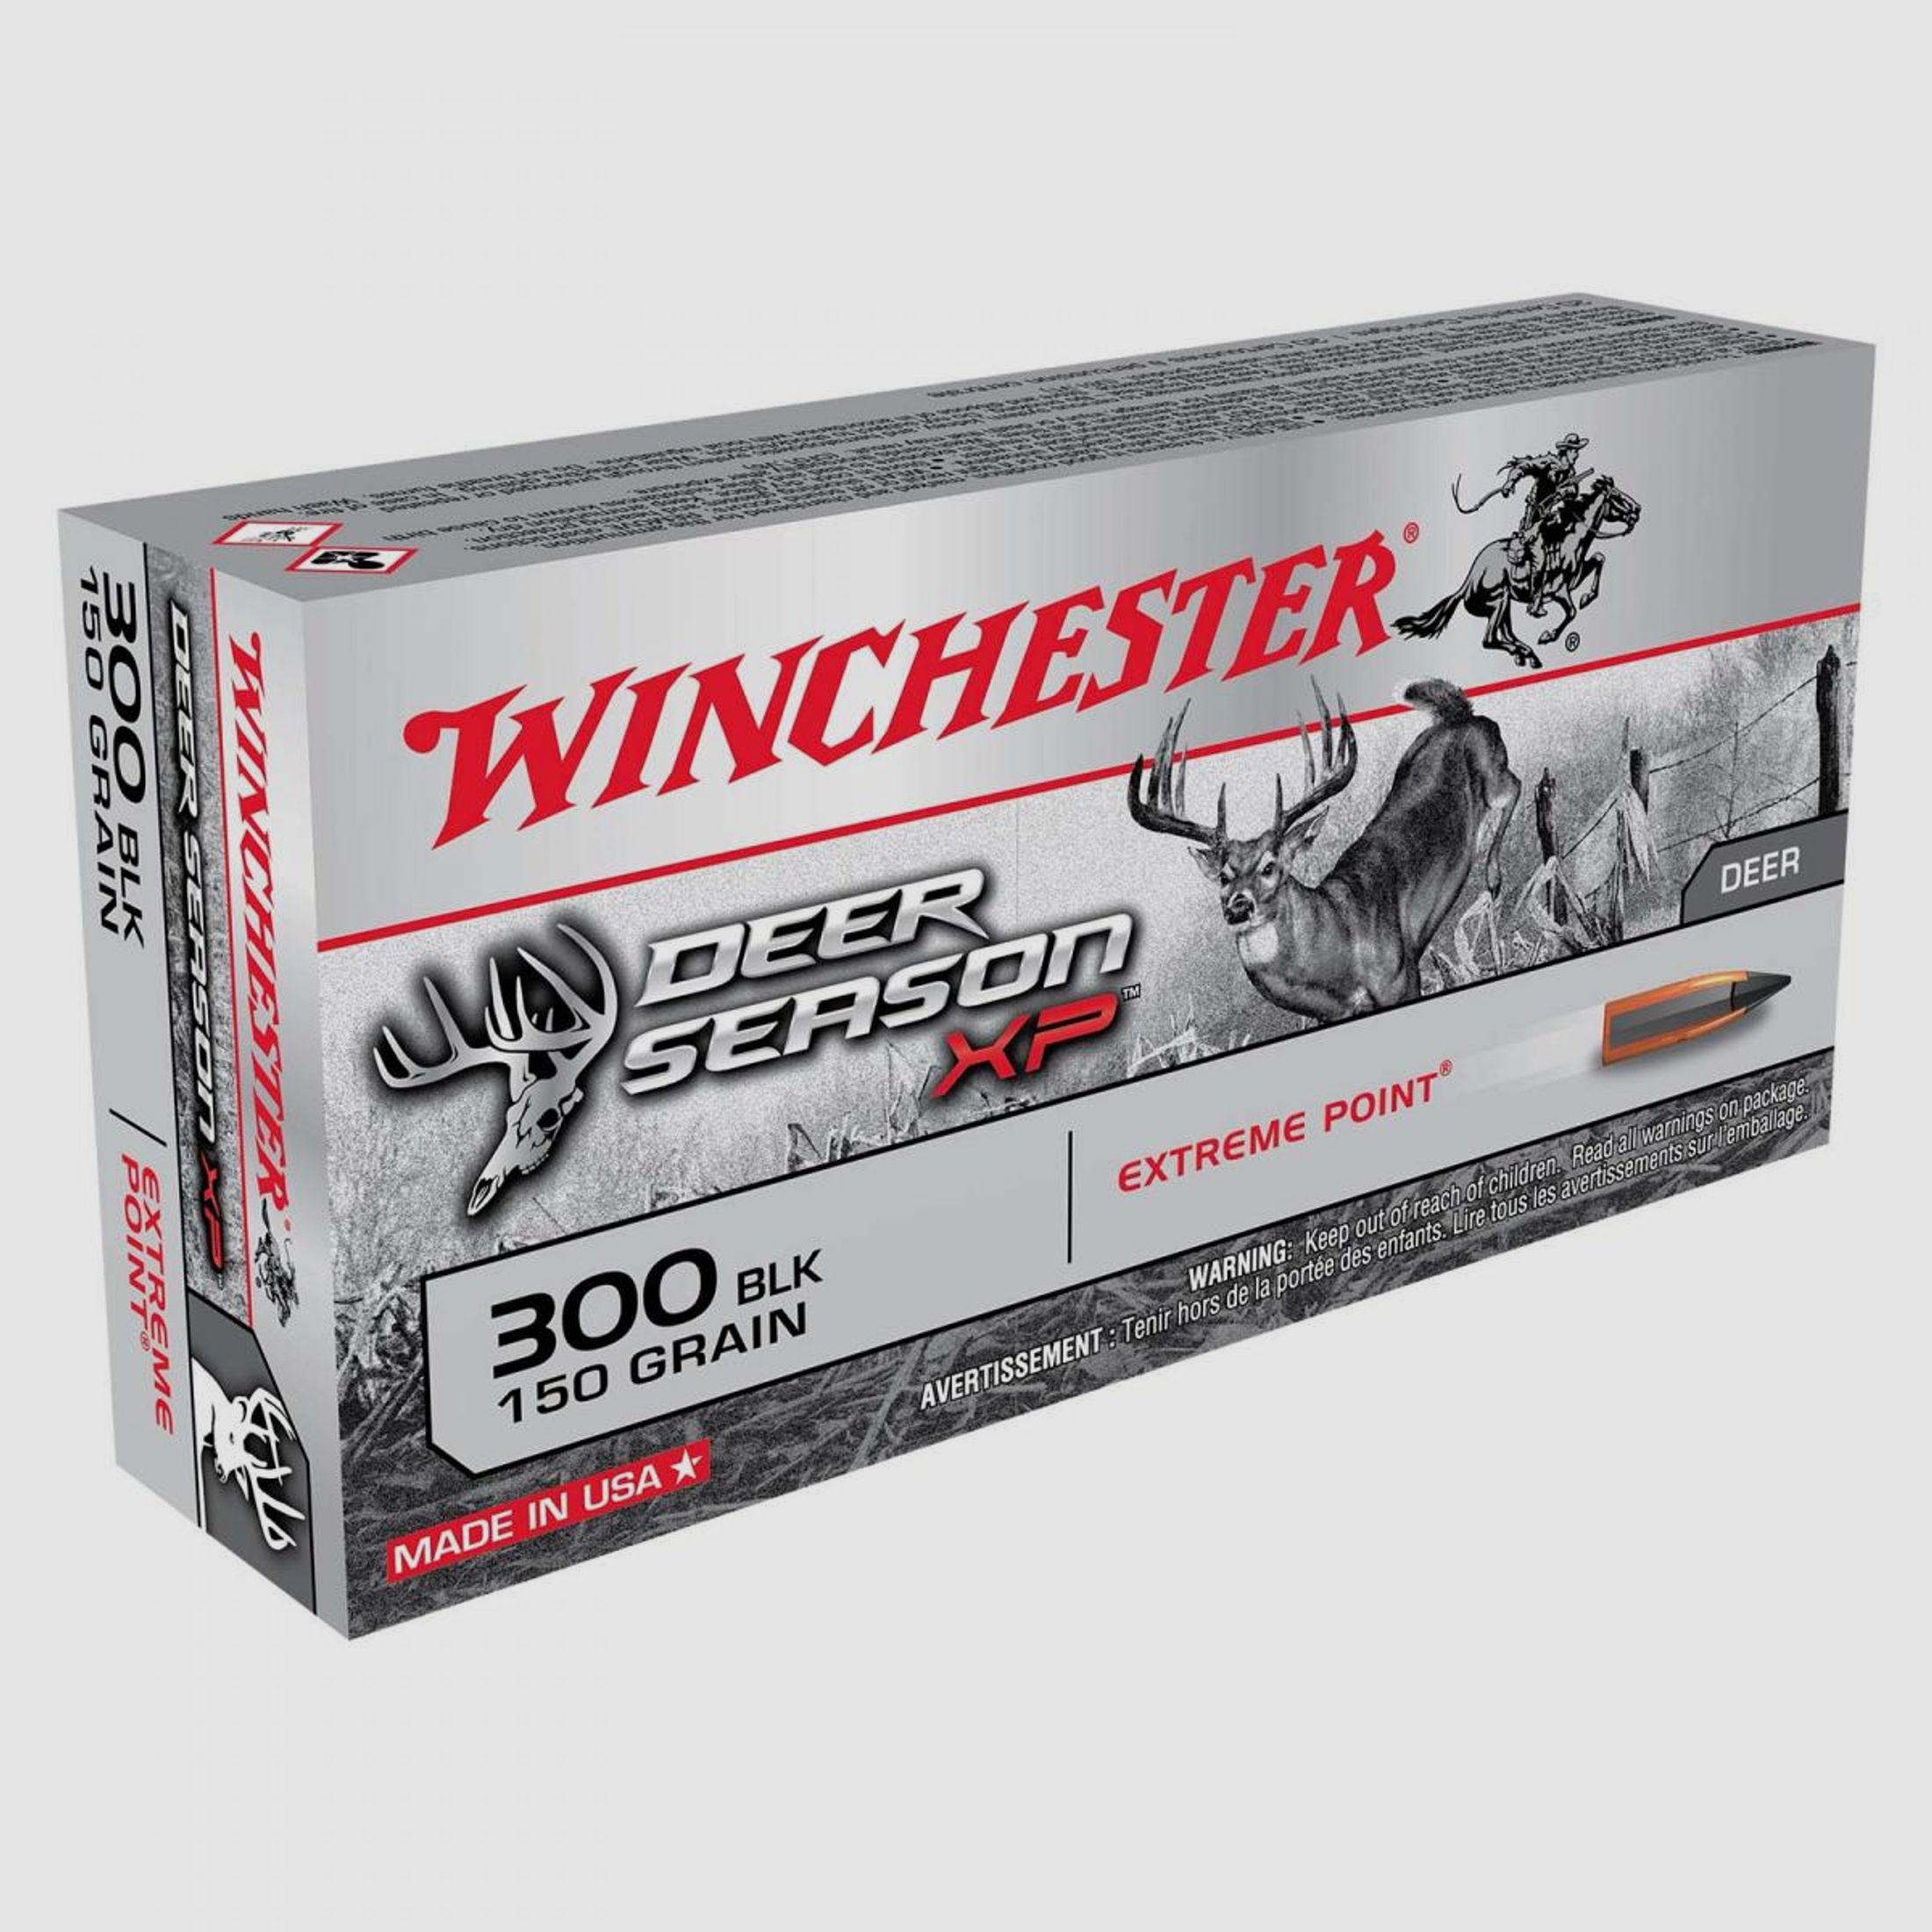 Winchester Dear Season XP .300 Blackout 150GR Extreme Point 20 Patronen